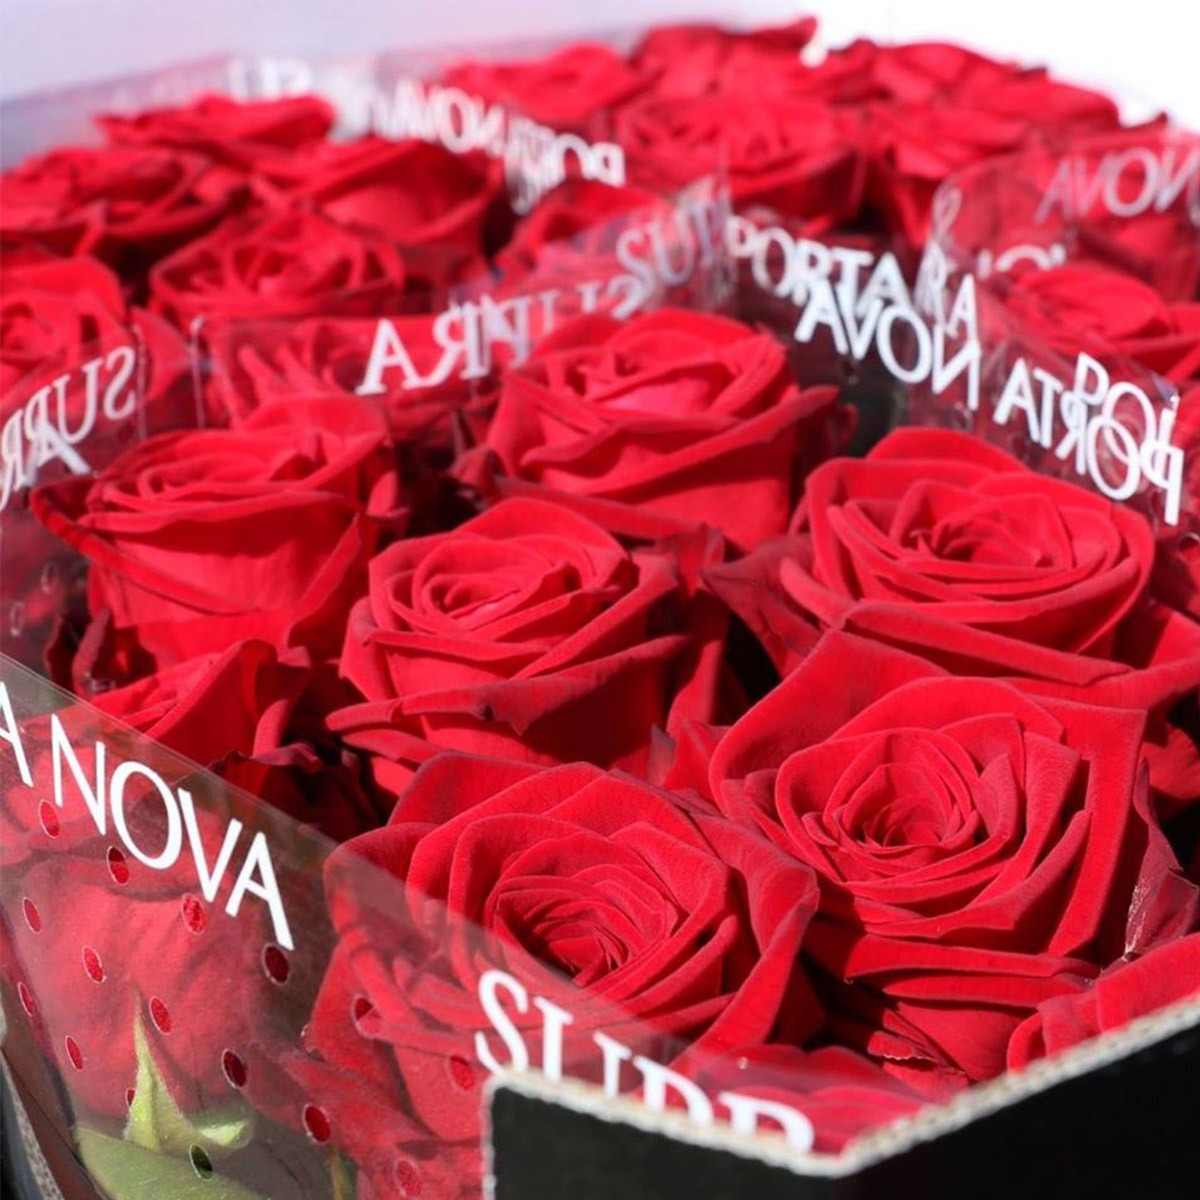 porta-nova-roses-grower-on-thursd-featured